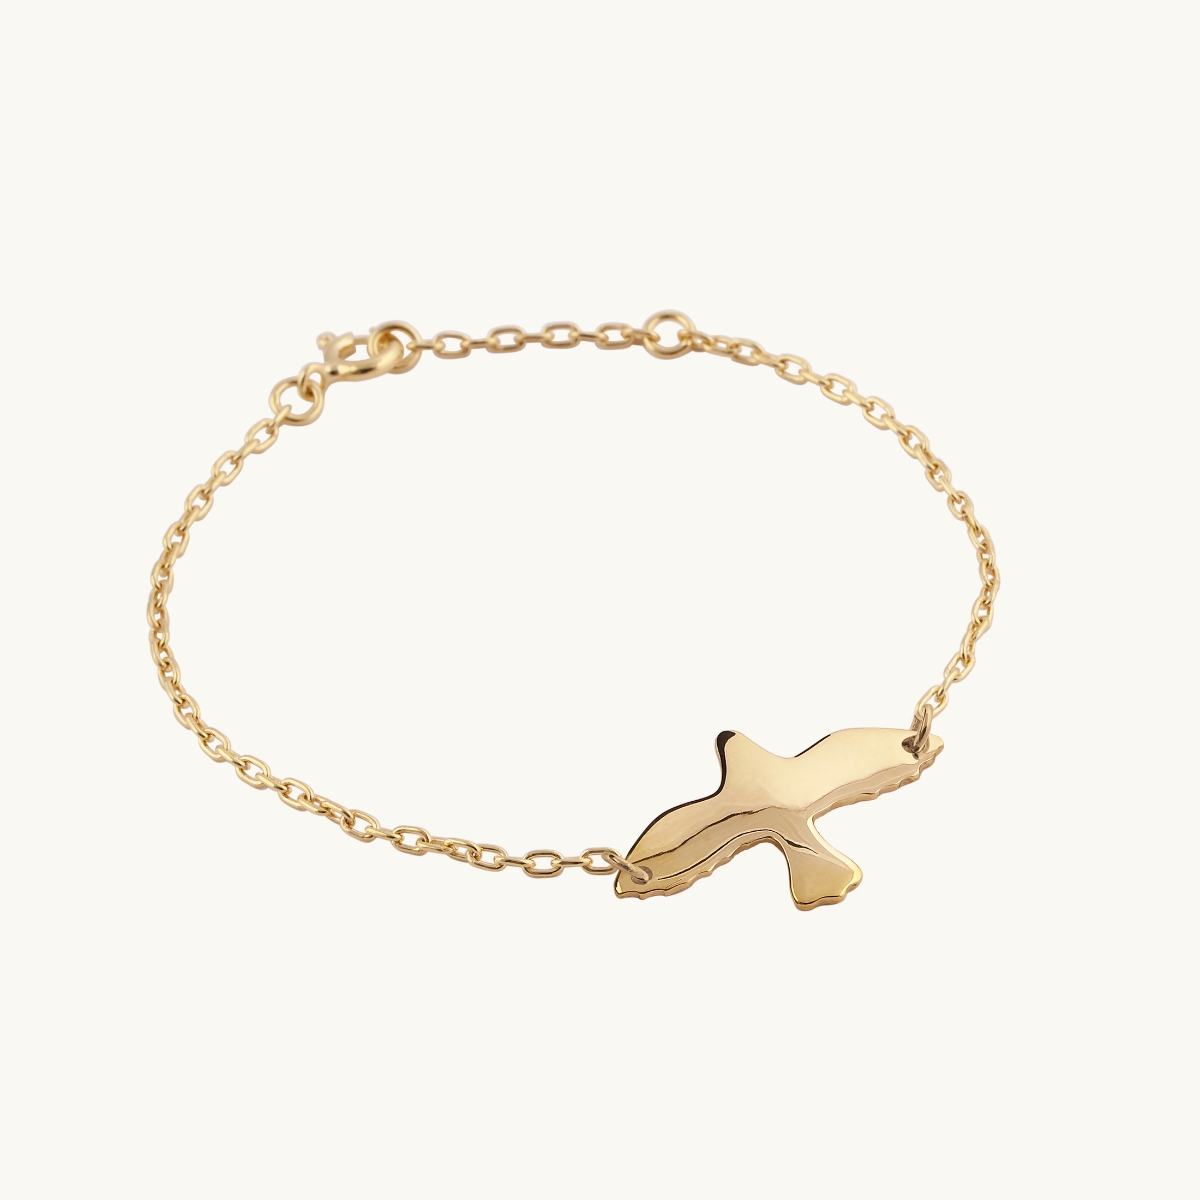 Gold bracelet with a dove pendant